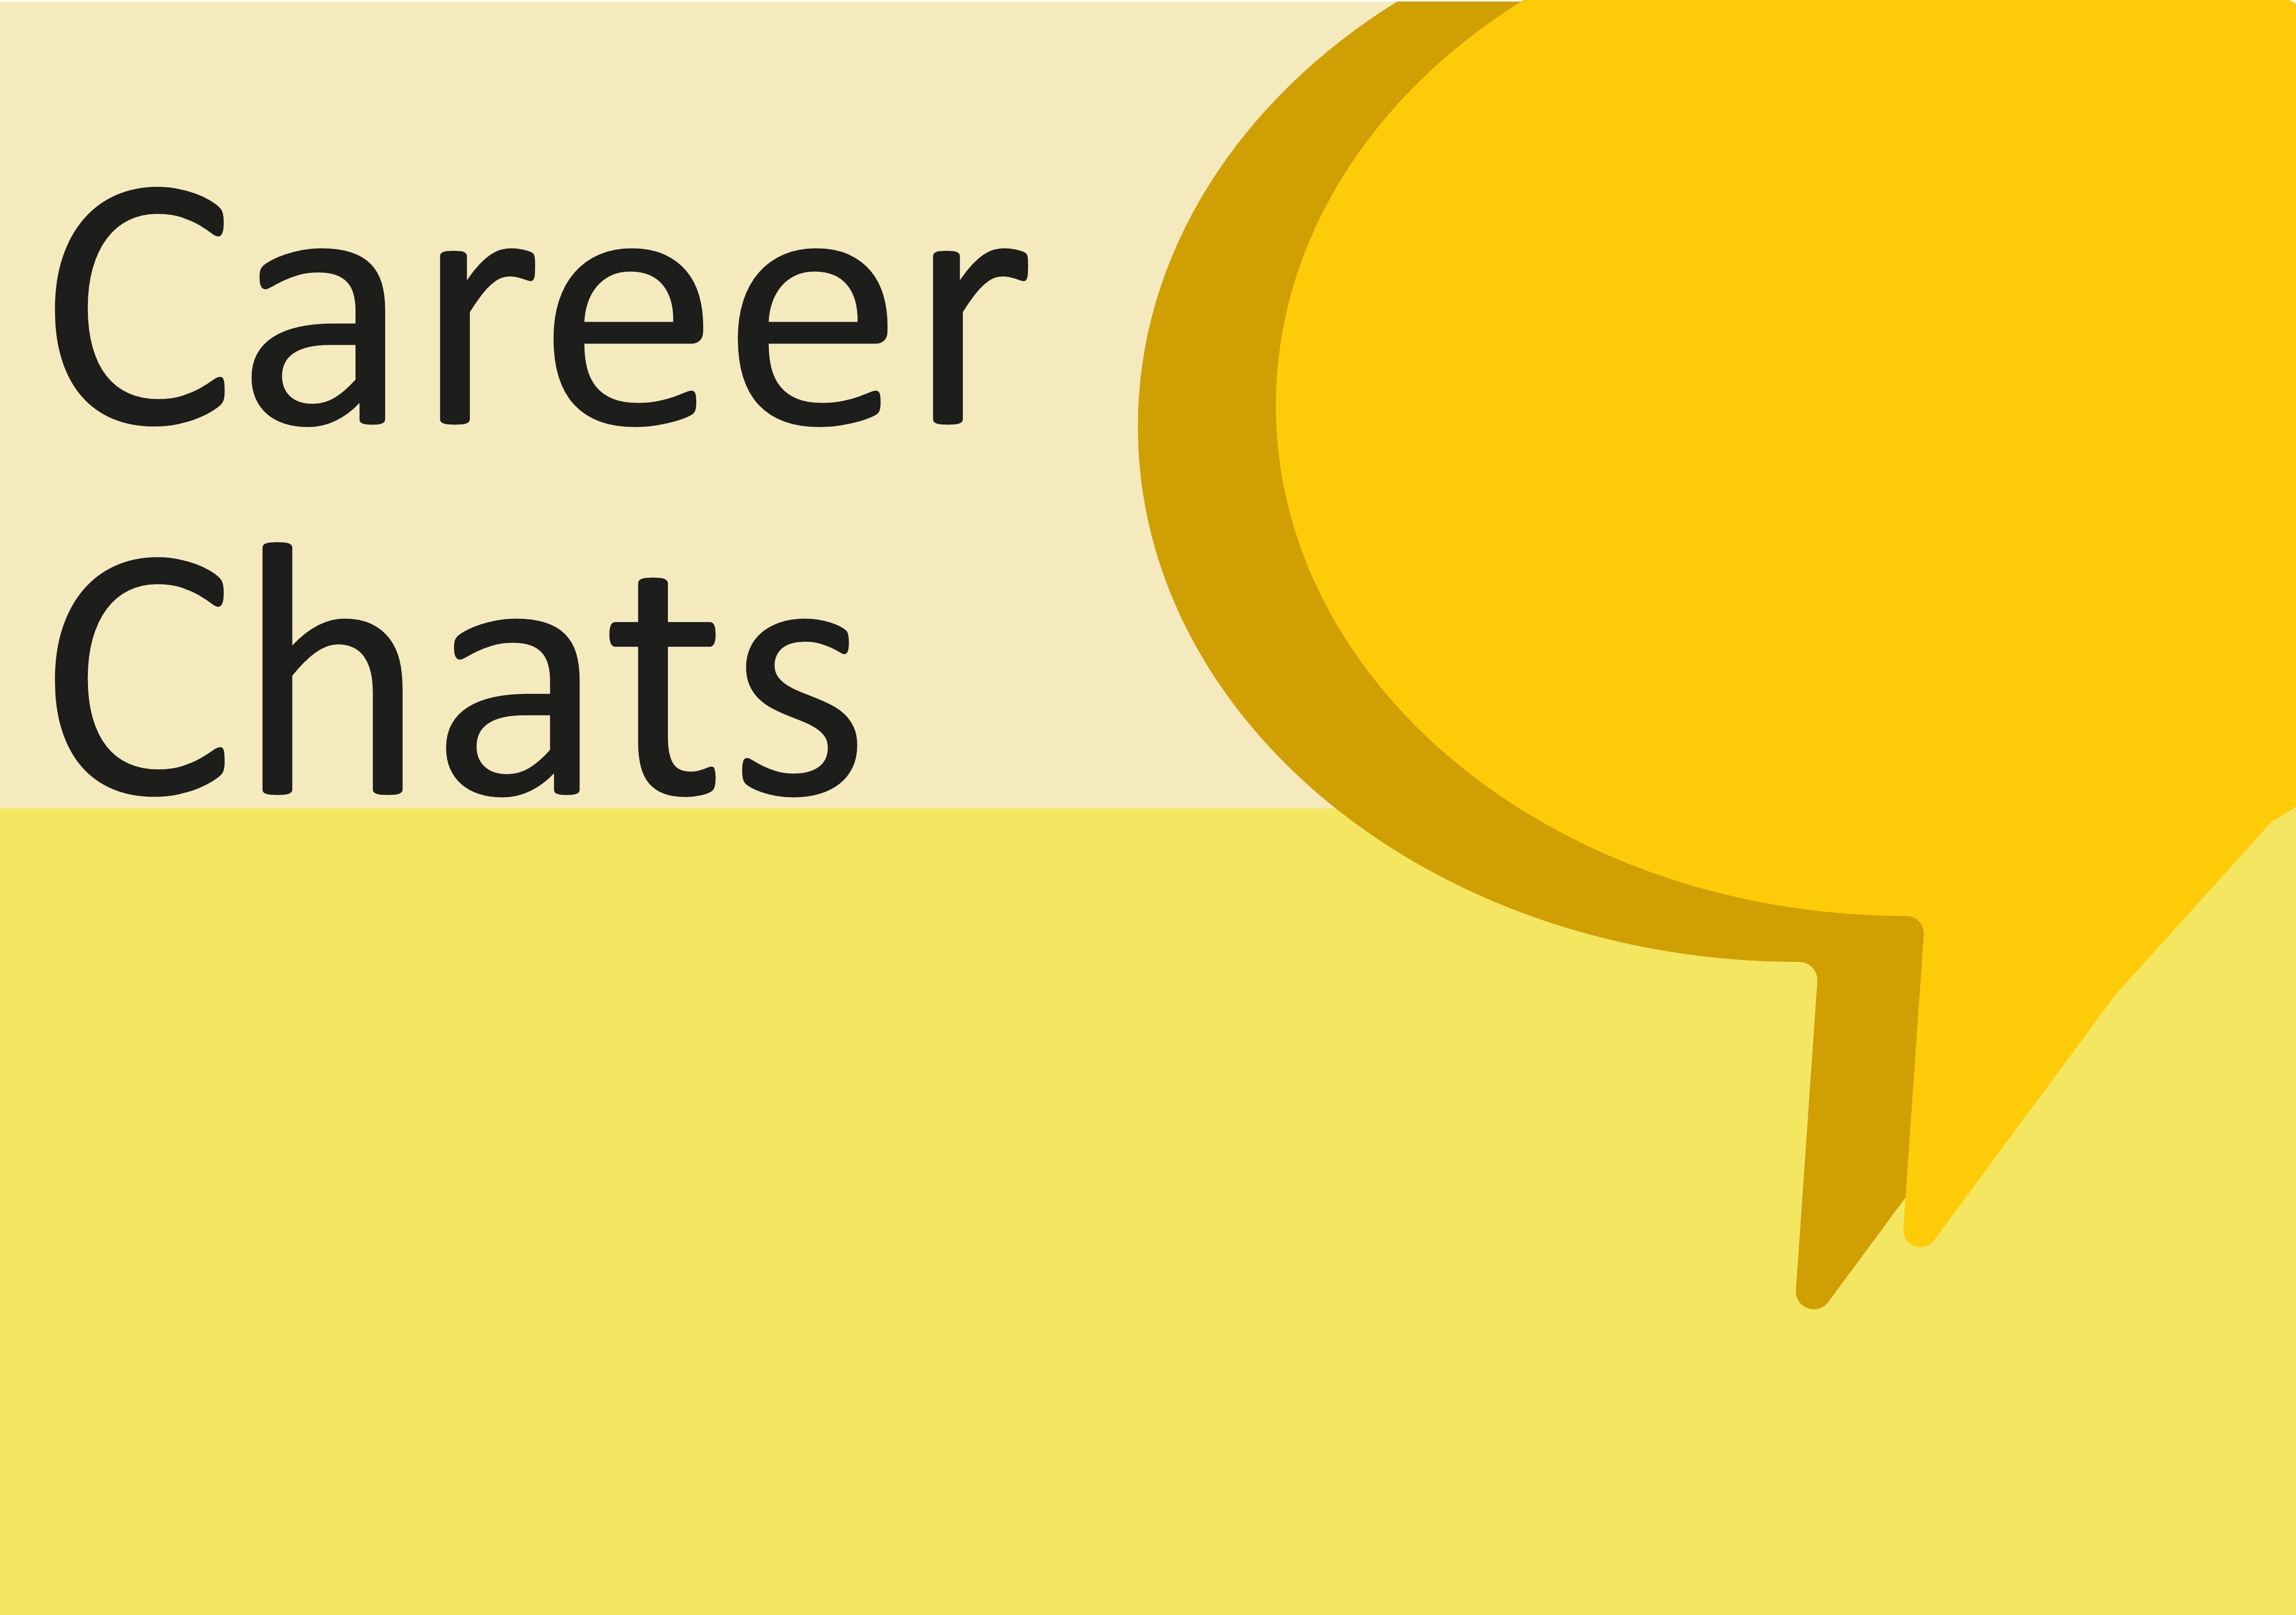 Career chats logo